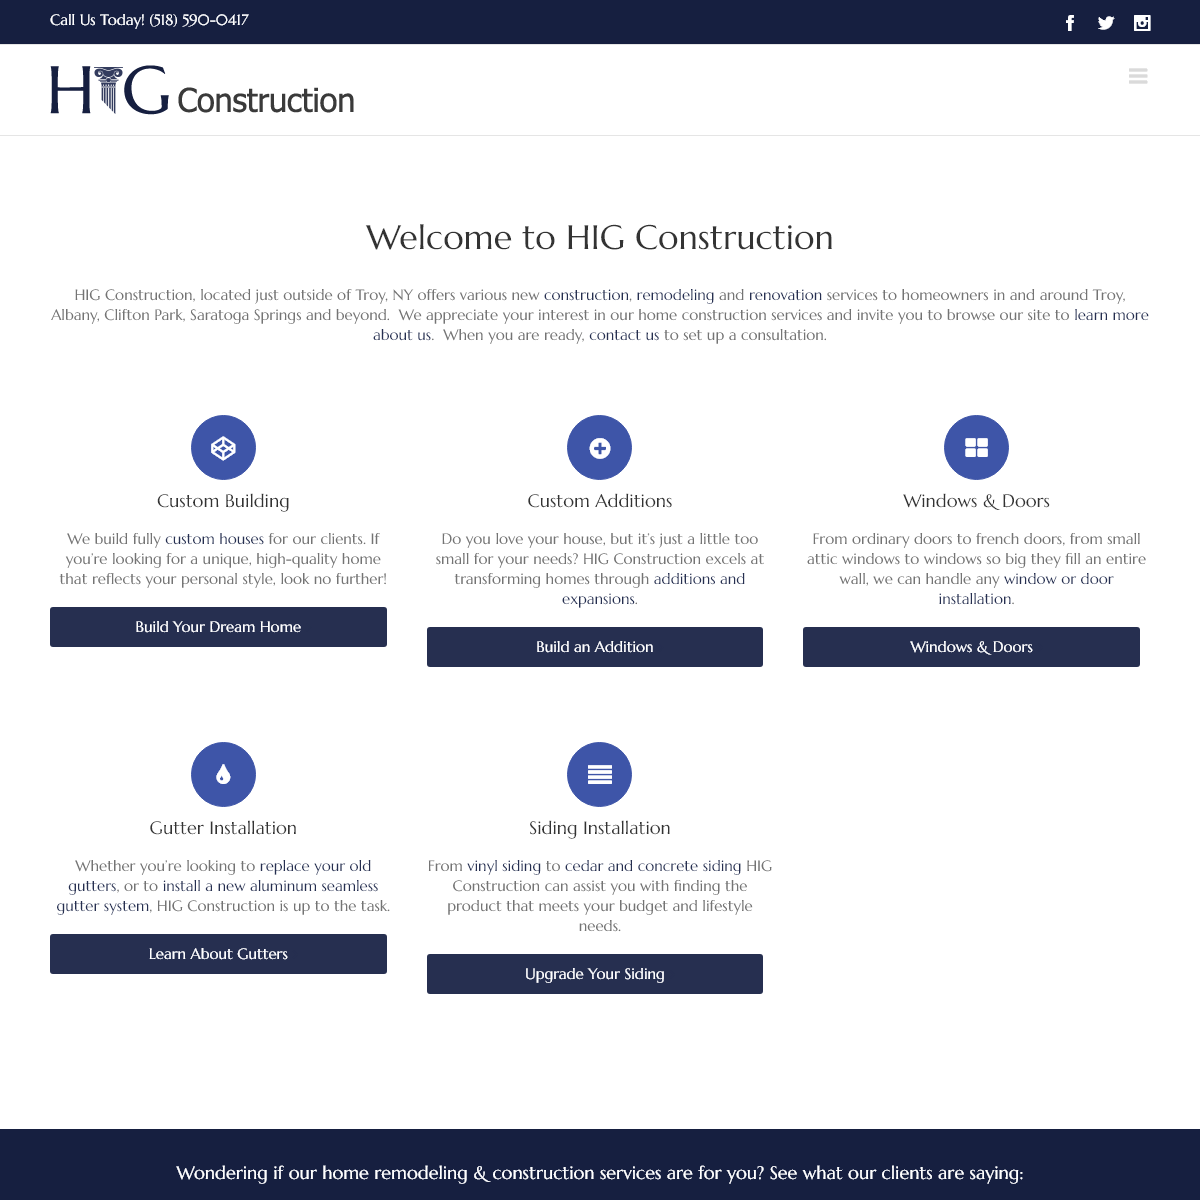 A complete backup of higconstruction.com